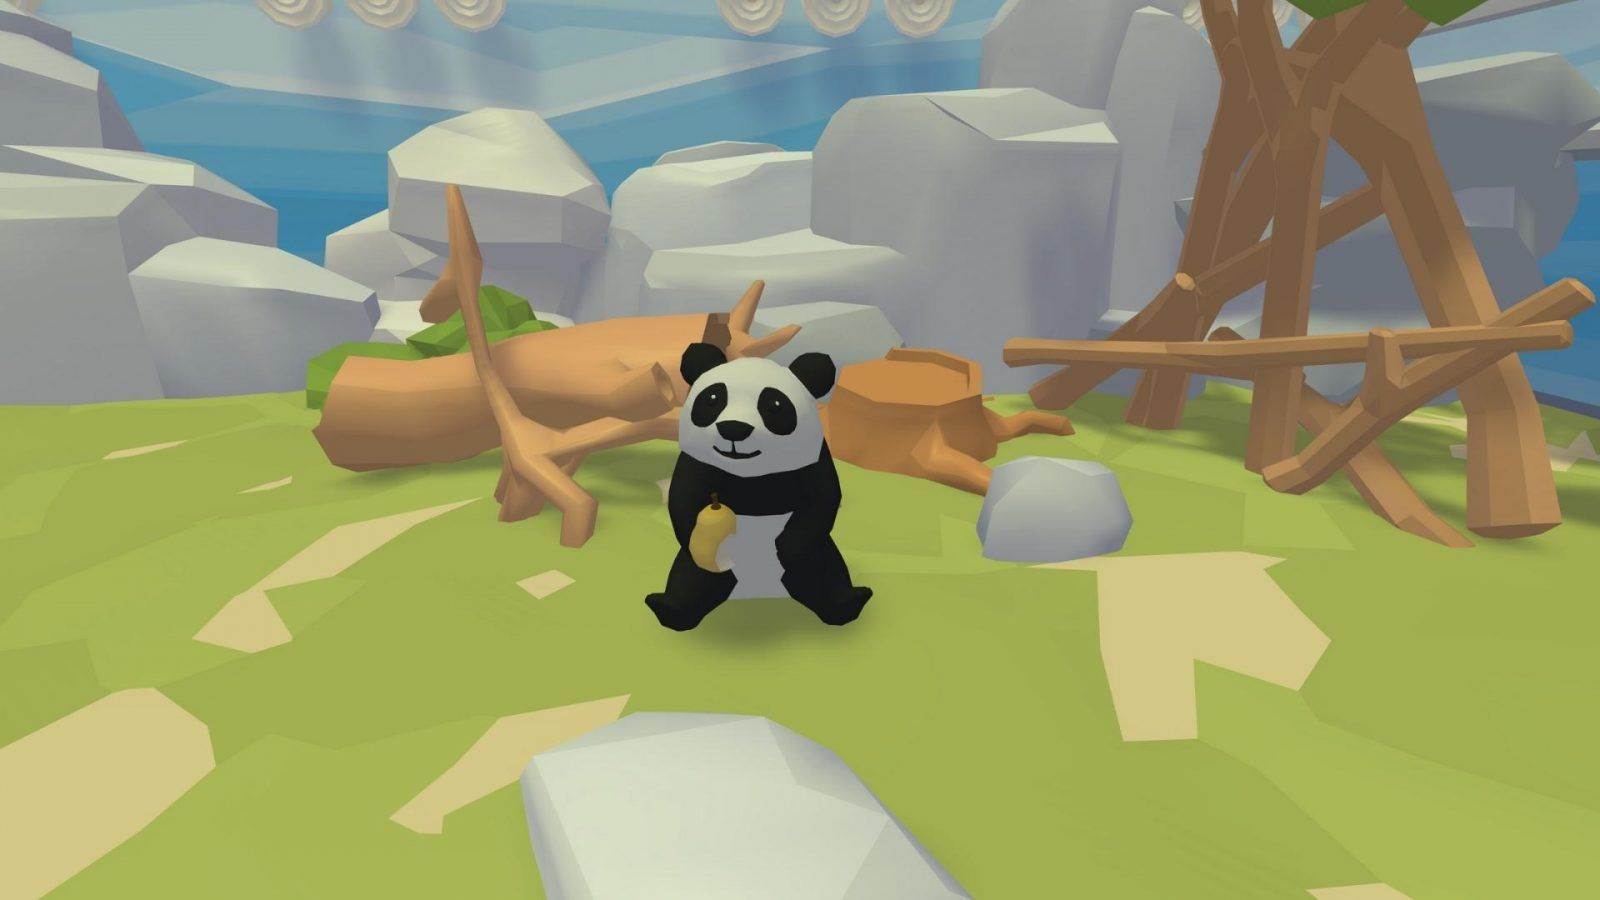 Ocean Park’s giant panda An An has been resurrected in the metaverse